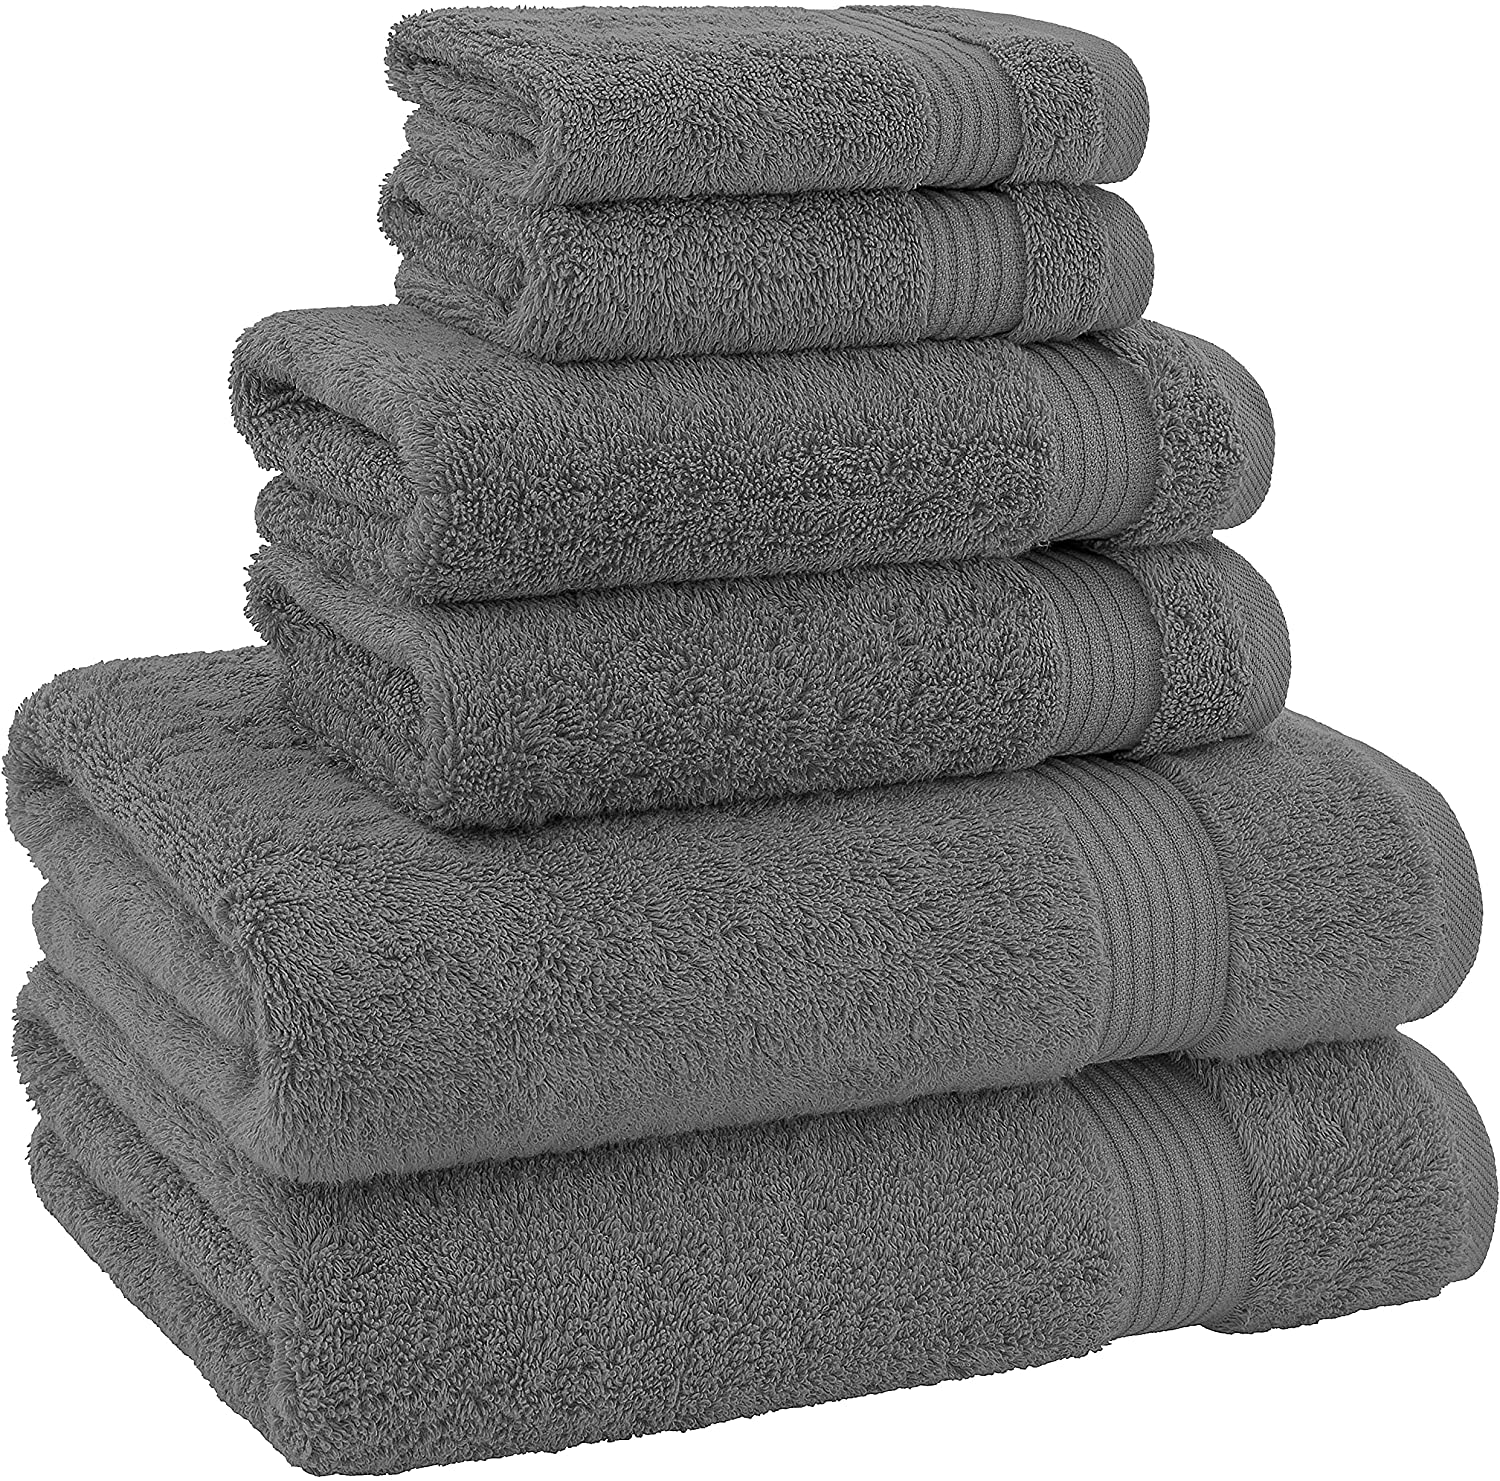 , 6 Piece Towel Set, 100% Turkish Cotton Soft Absorbent Towels for Bathroom, 2 Bath Towels 2 Hand Towels 2 Washcloths, Gray